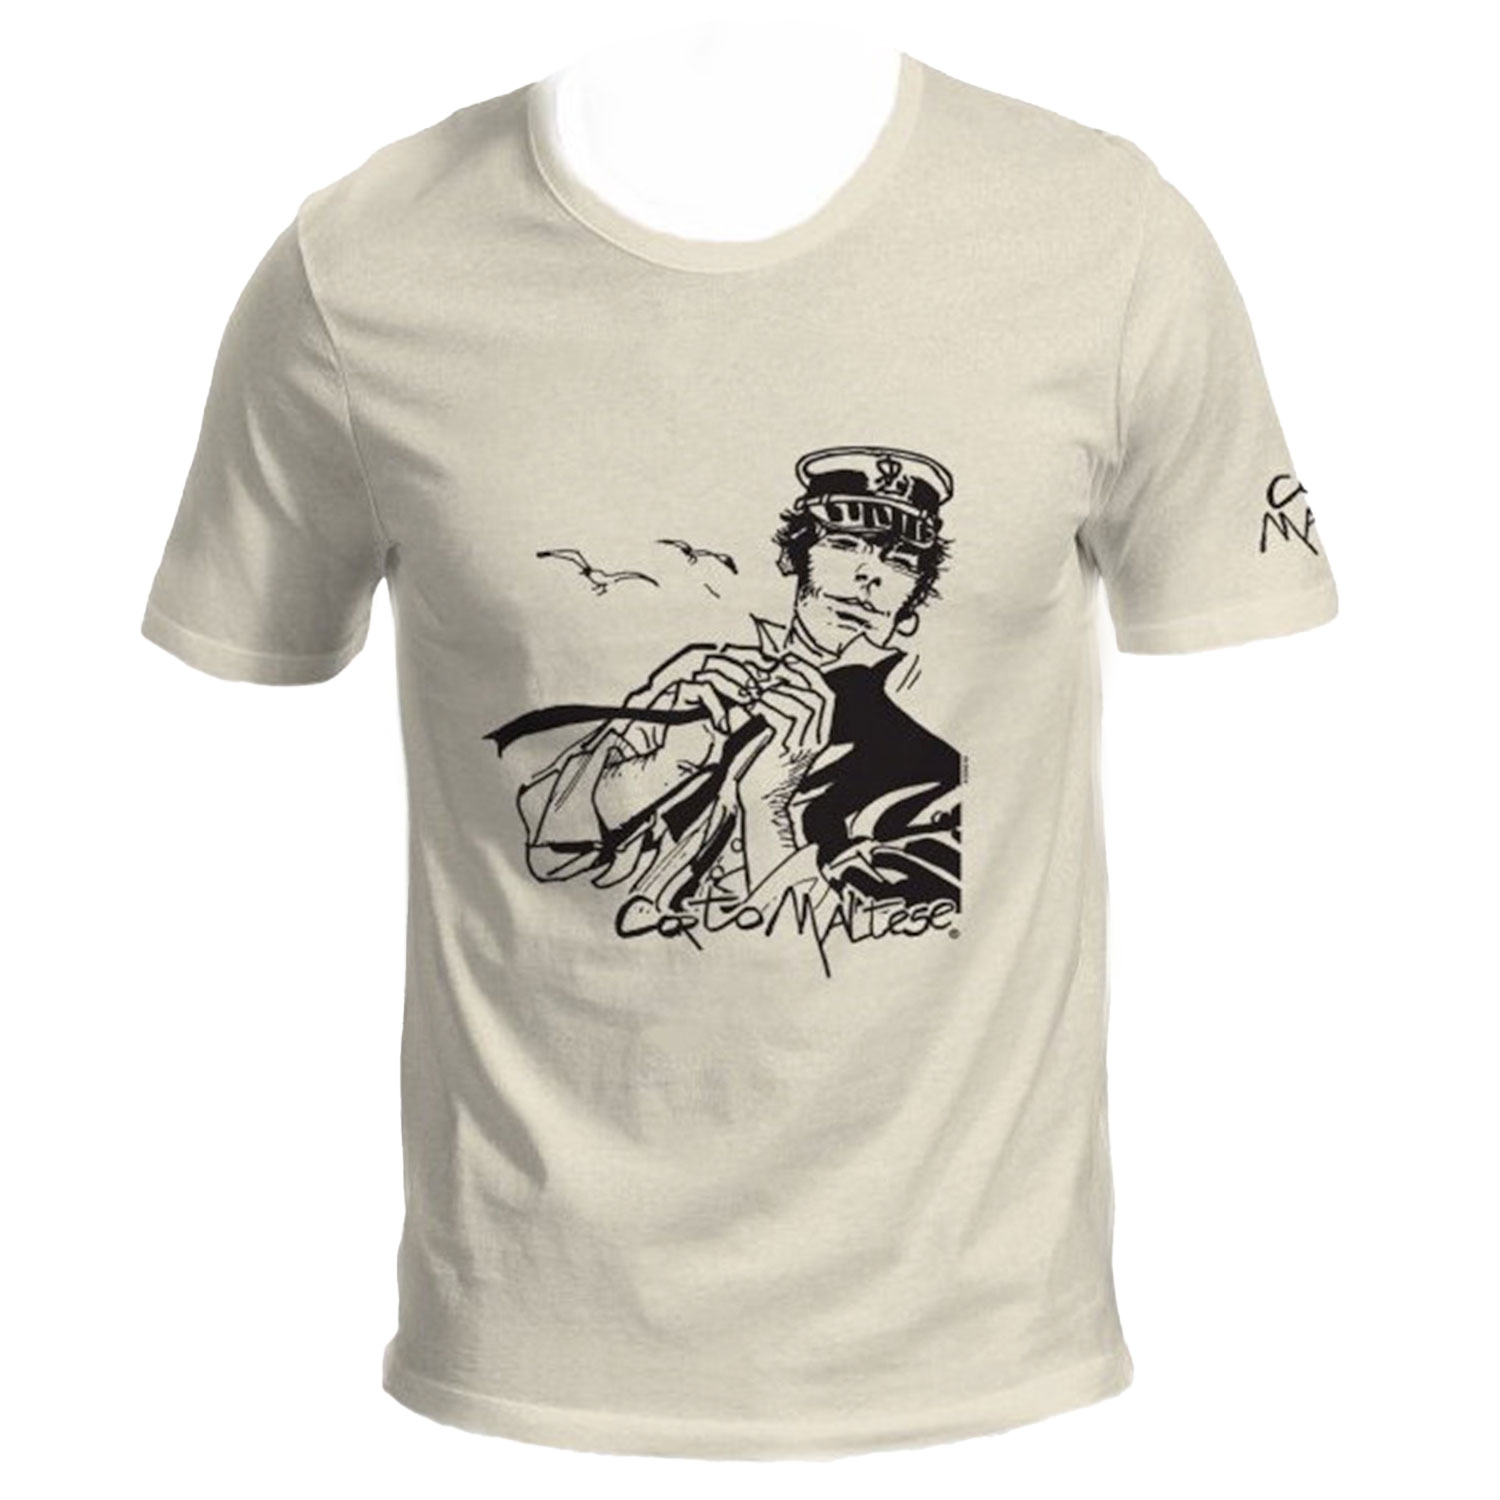 T-shirt Hugo Pratt : Corto Maltese dans le vent (écru)